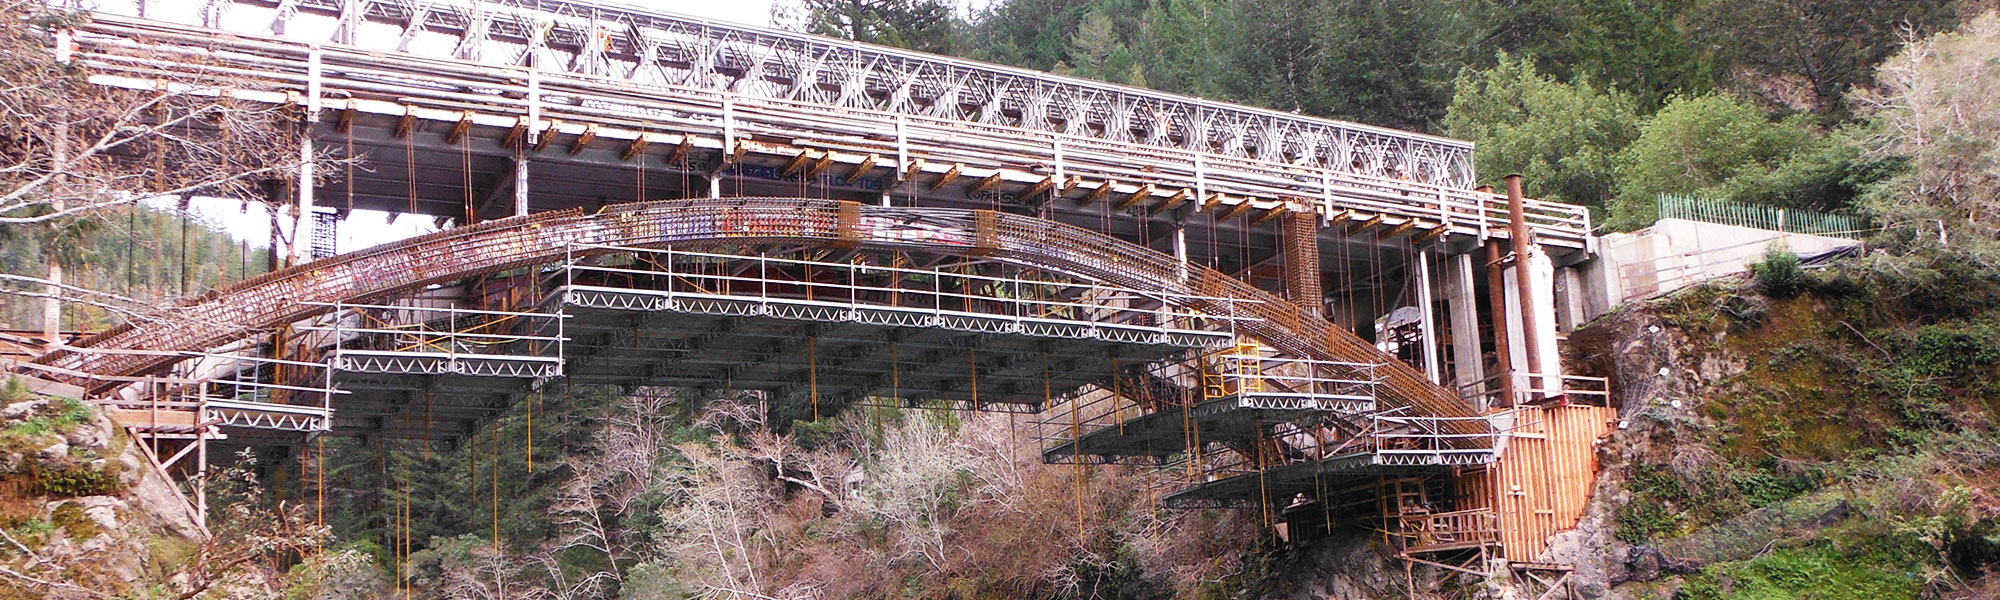 Smith River bridge replacement, Crescent City